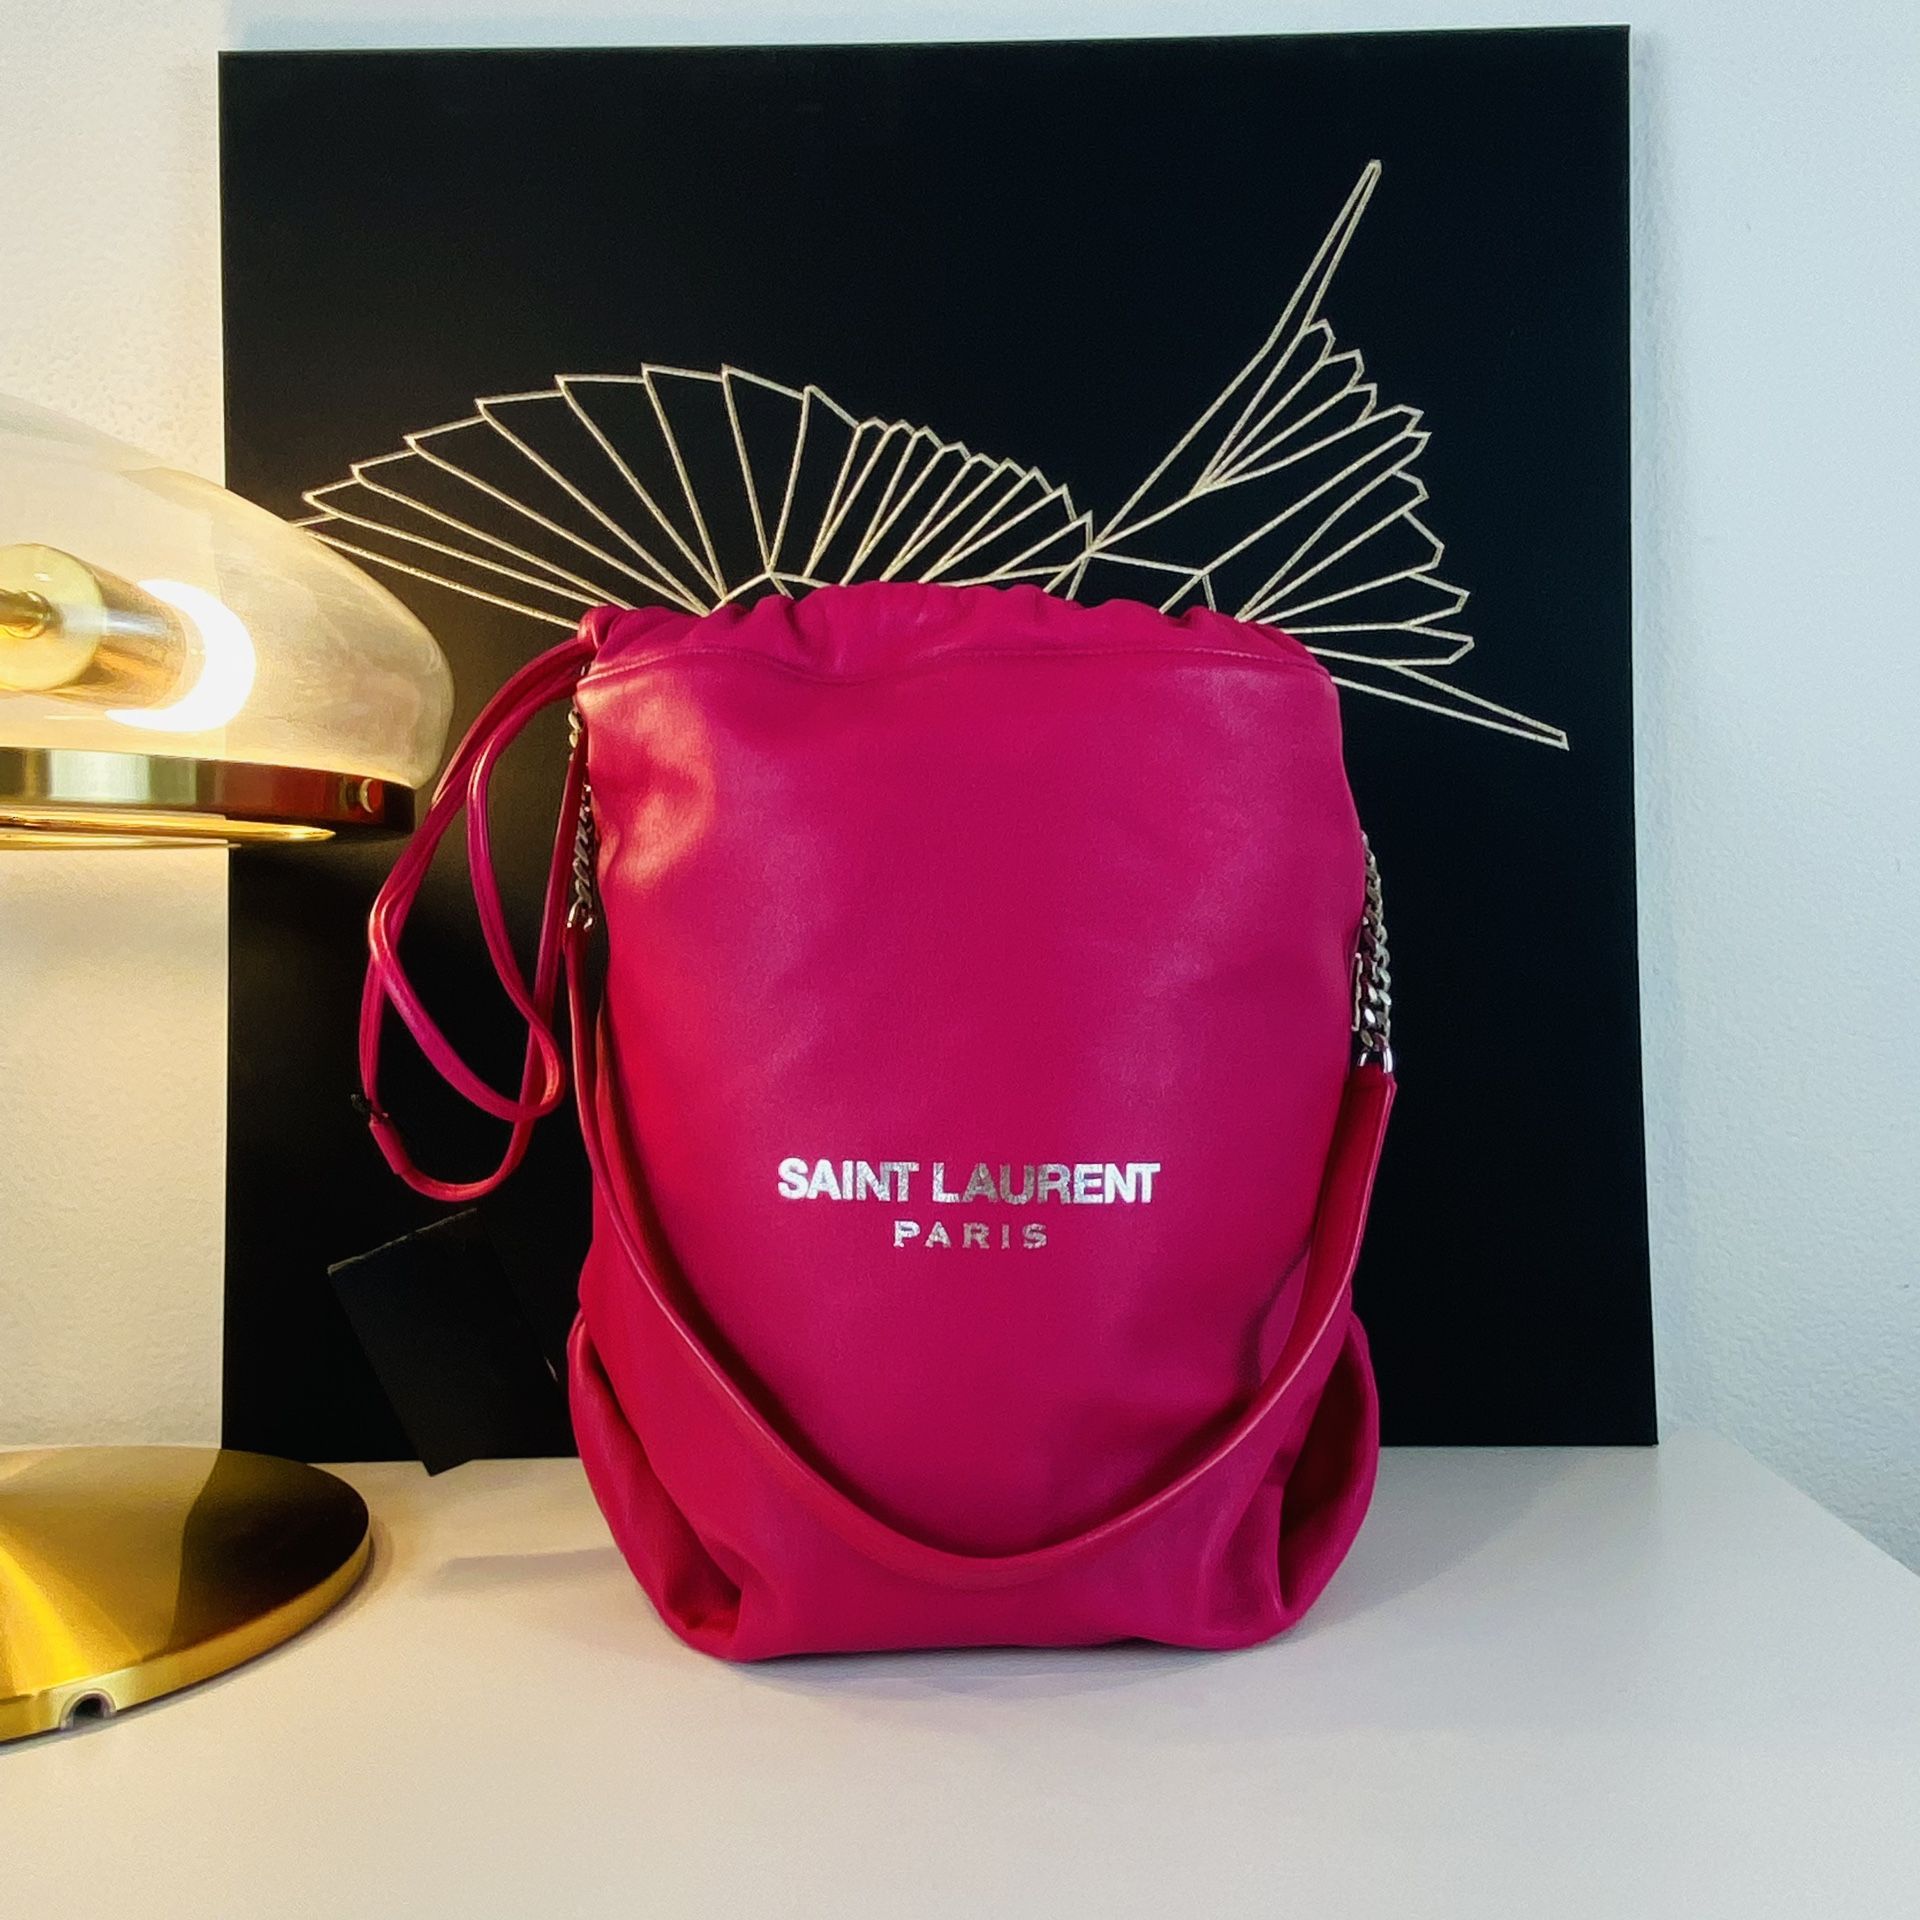 Saint Laurent Paris Teddy Drawstring Pink Bucket Shoulder Bag $2,400